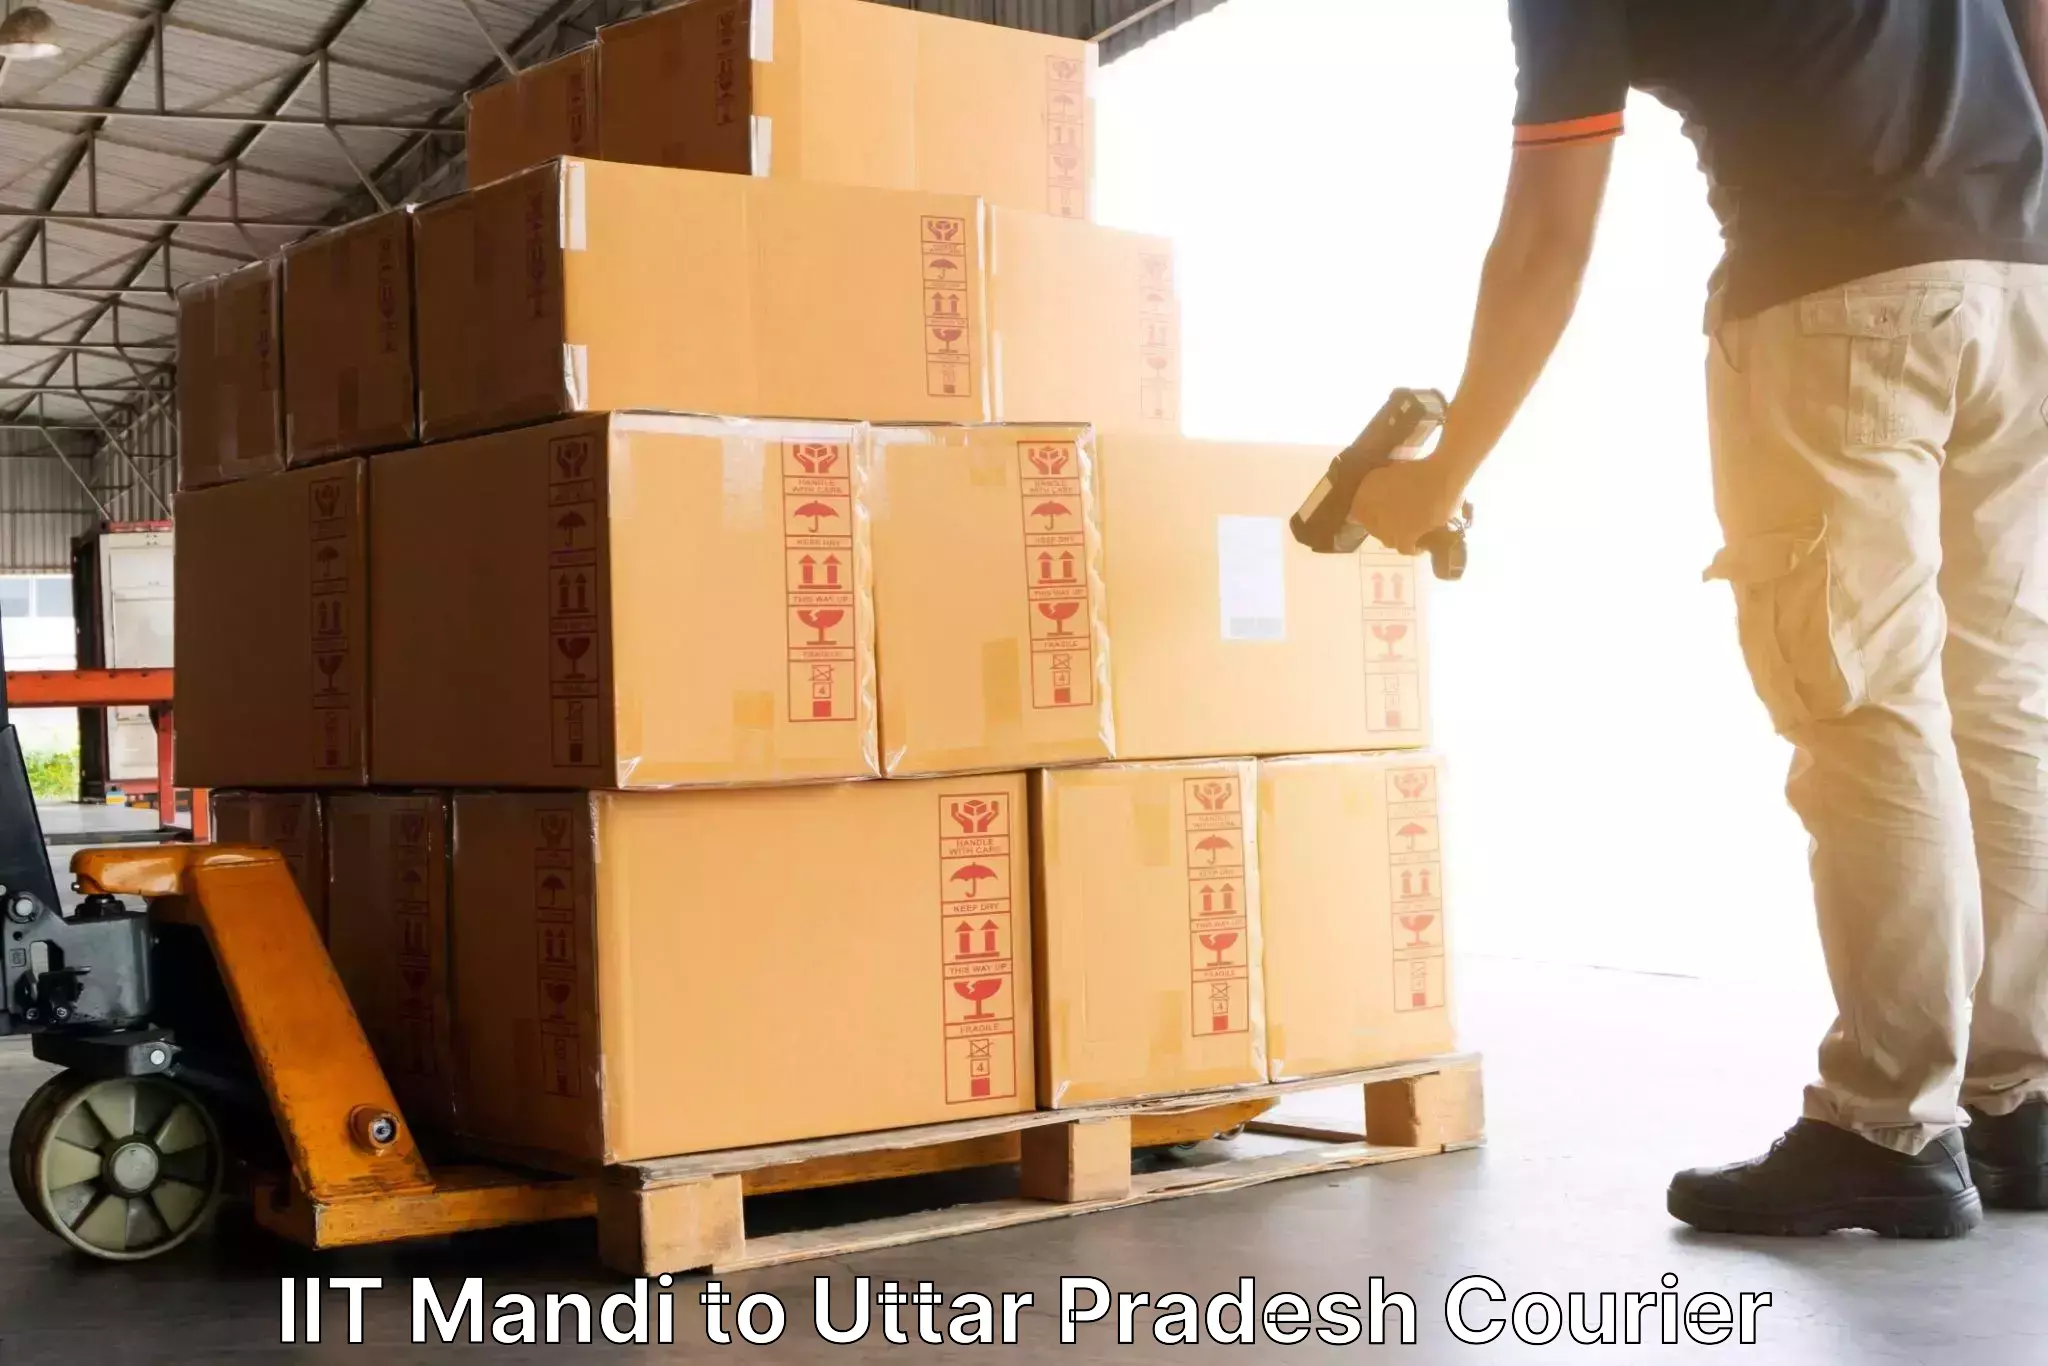 Express logistics service IIT Mandi to Unnao